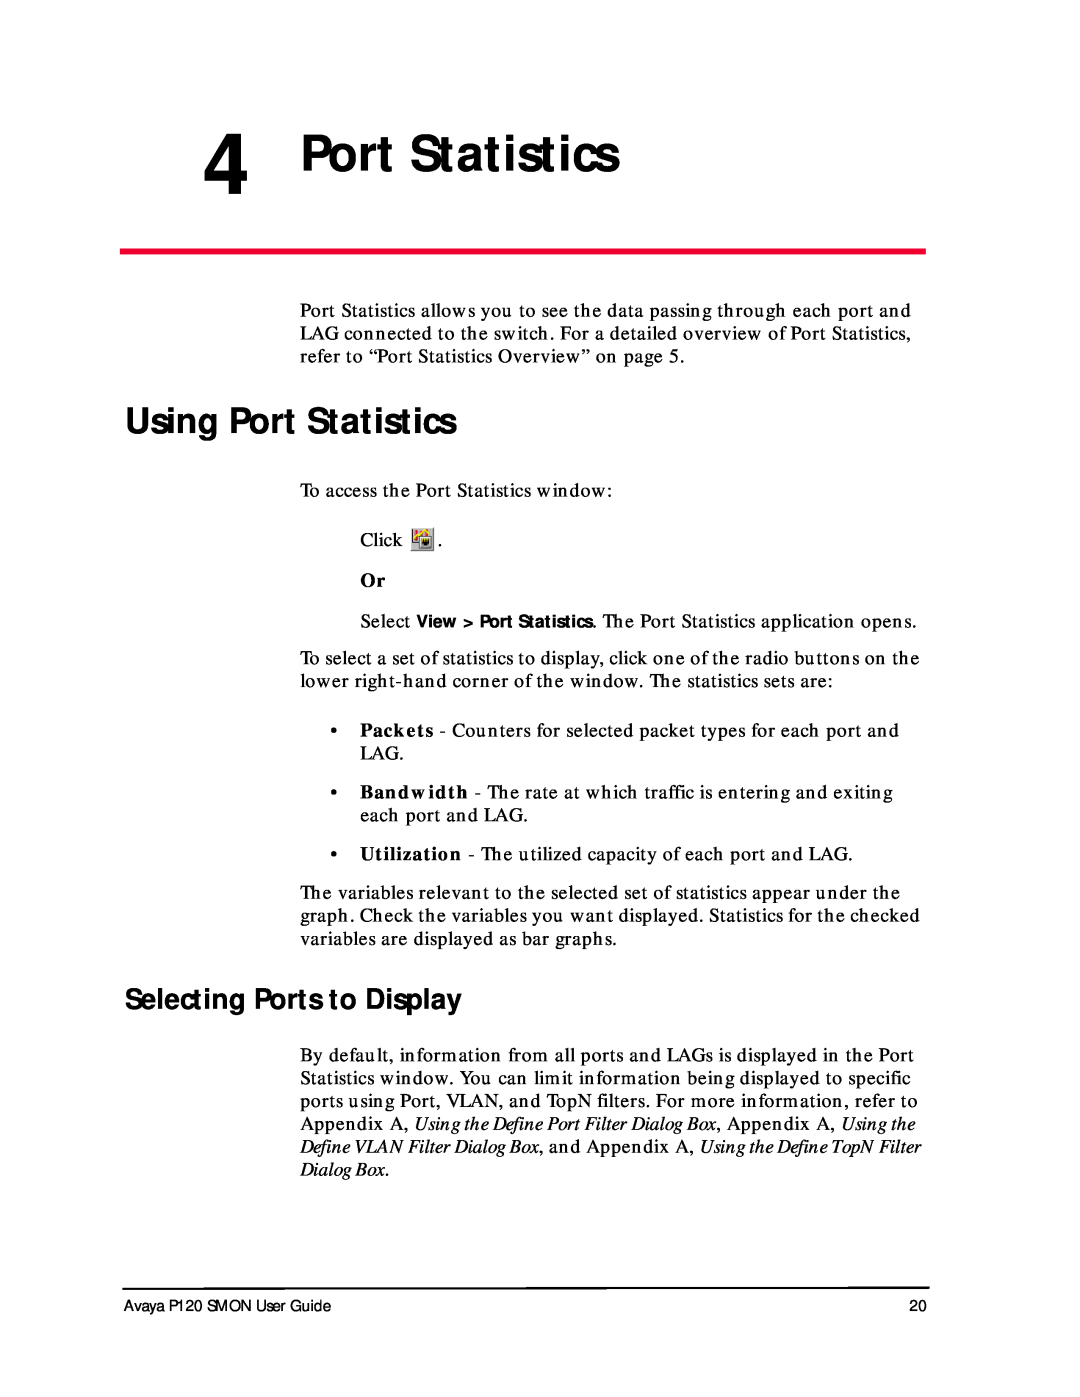 Avaya P120 SMON manual Using Port Statistics, Selecting Ports to Display 